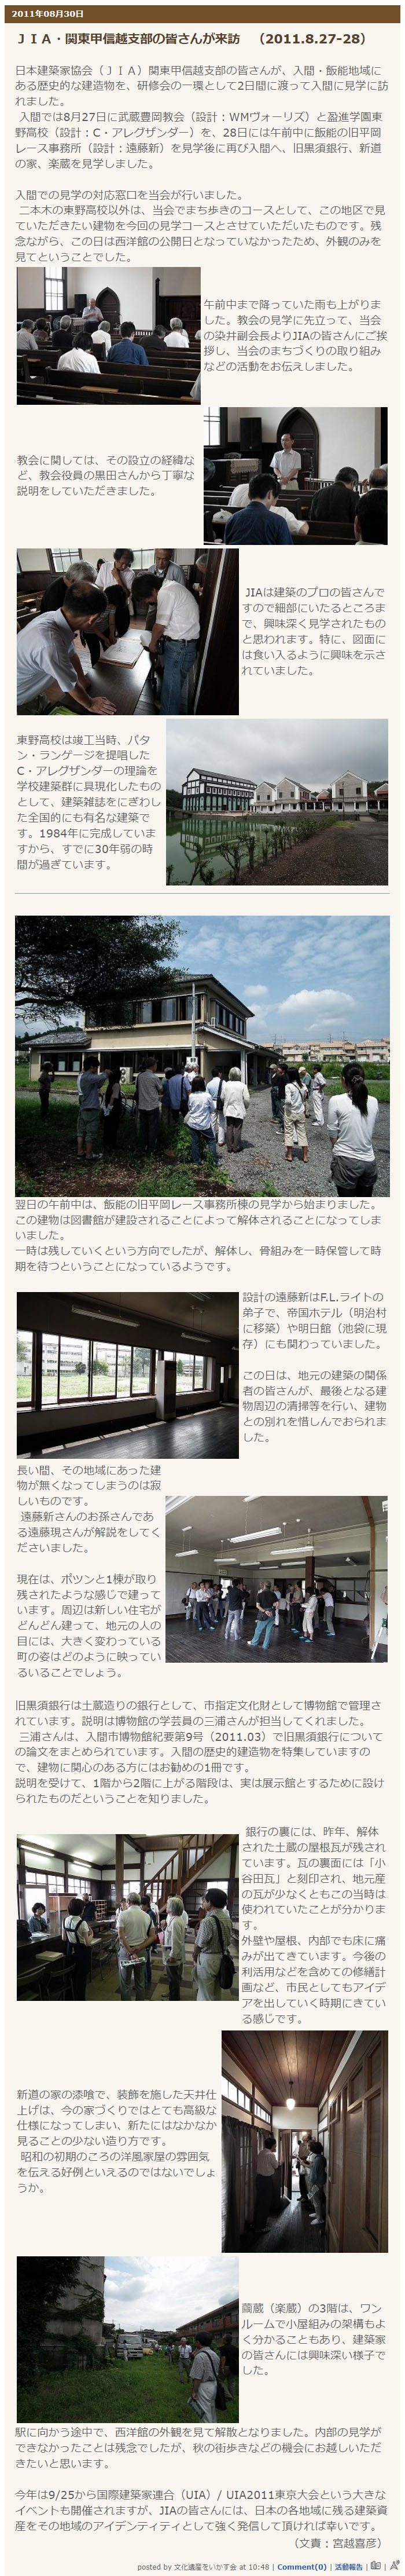 ＪＩＡ・関東甲信越支部の皆さんが来訪　（2011.8.27-28） 日本建築家協会（ＪＩＡ）関東甲信越支部の皆さんが、入間・飯能地域にある歴史的な建造物を、研修会の一環として2日間に渡って入間に見学に訪れました。  入間では8月27日に武蔵豊岡教会（設計：WMヴォーリズ）と盈進学園東野高校（設計：C・アレグザンダー）を、28日には午前中に飯能の旧平岡レース事務所（設計：遠藤新）を見学後に再び入間へ、旧黒須銀行、新道の家、楽蔵を見学しました。